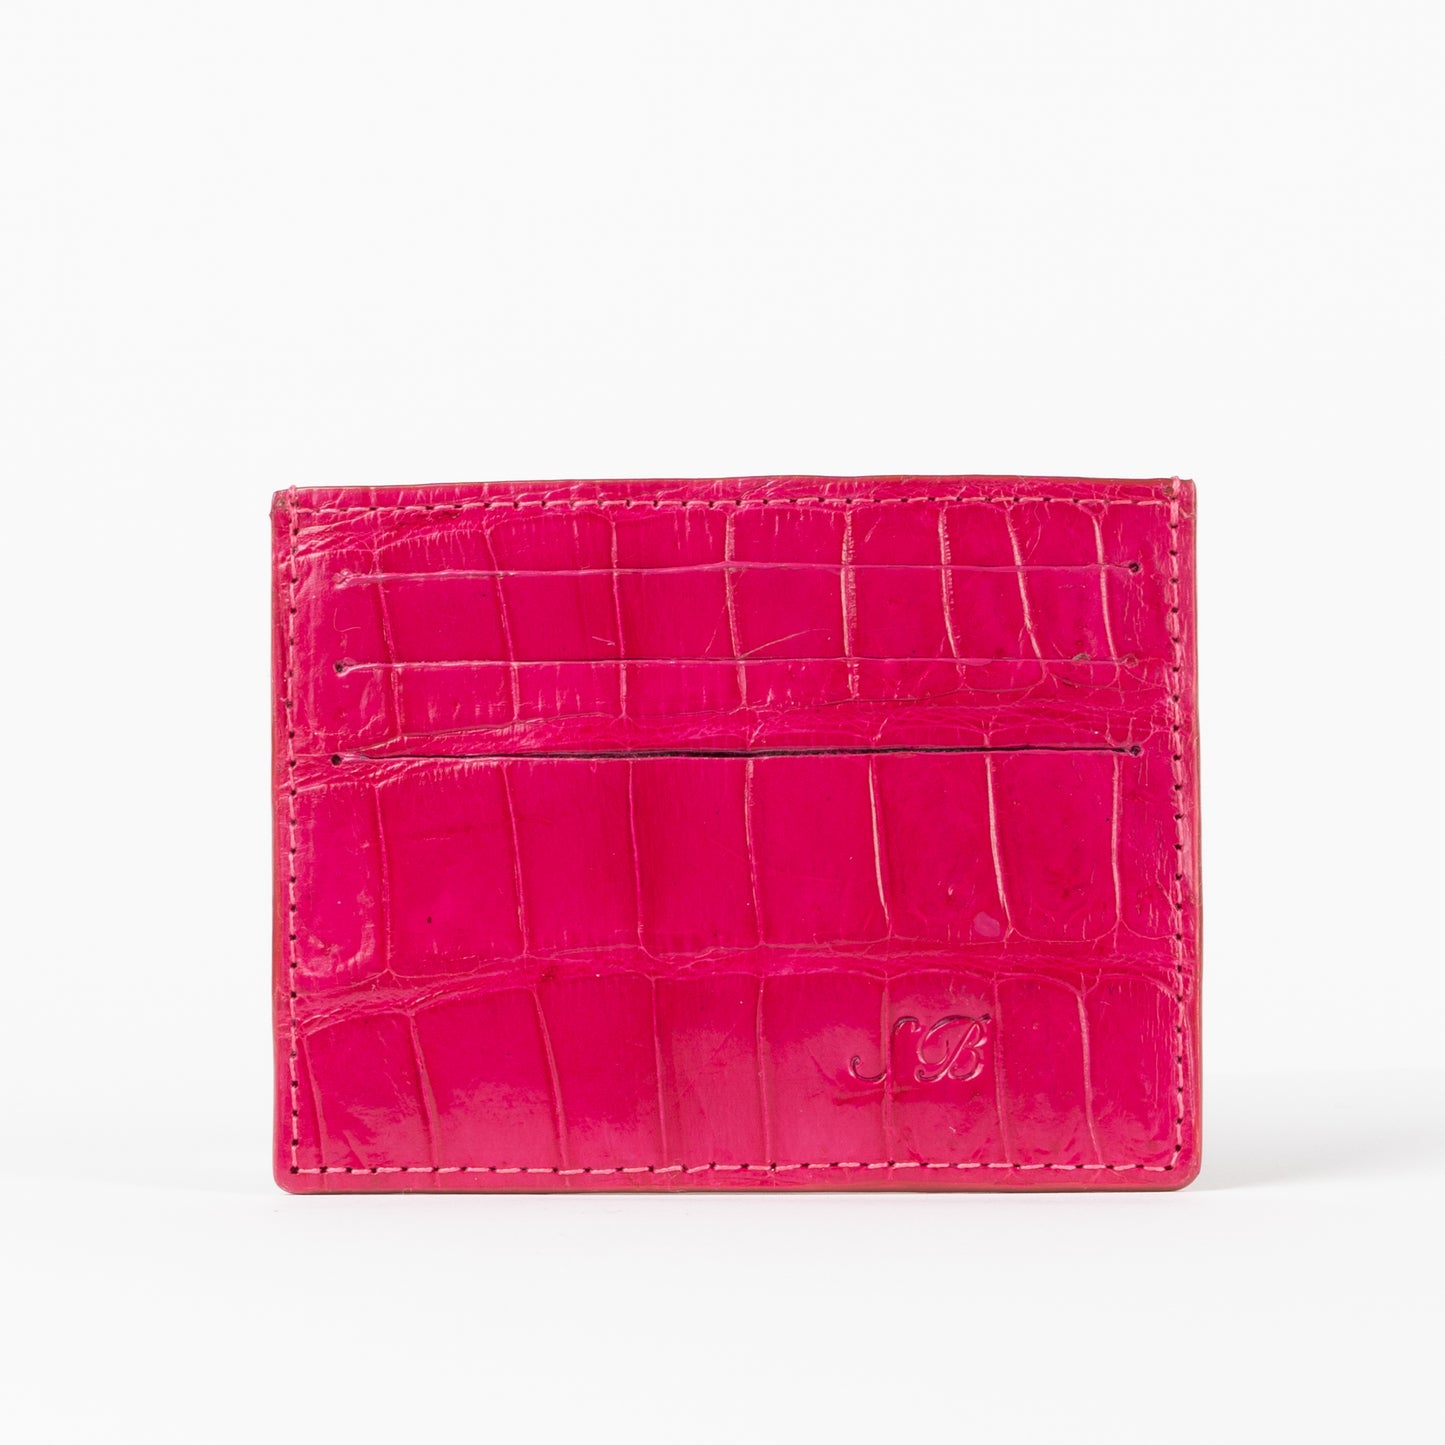 pink crocodile skin credit card case from sherrill bros 